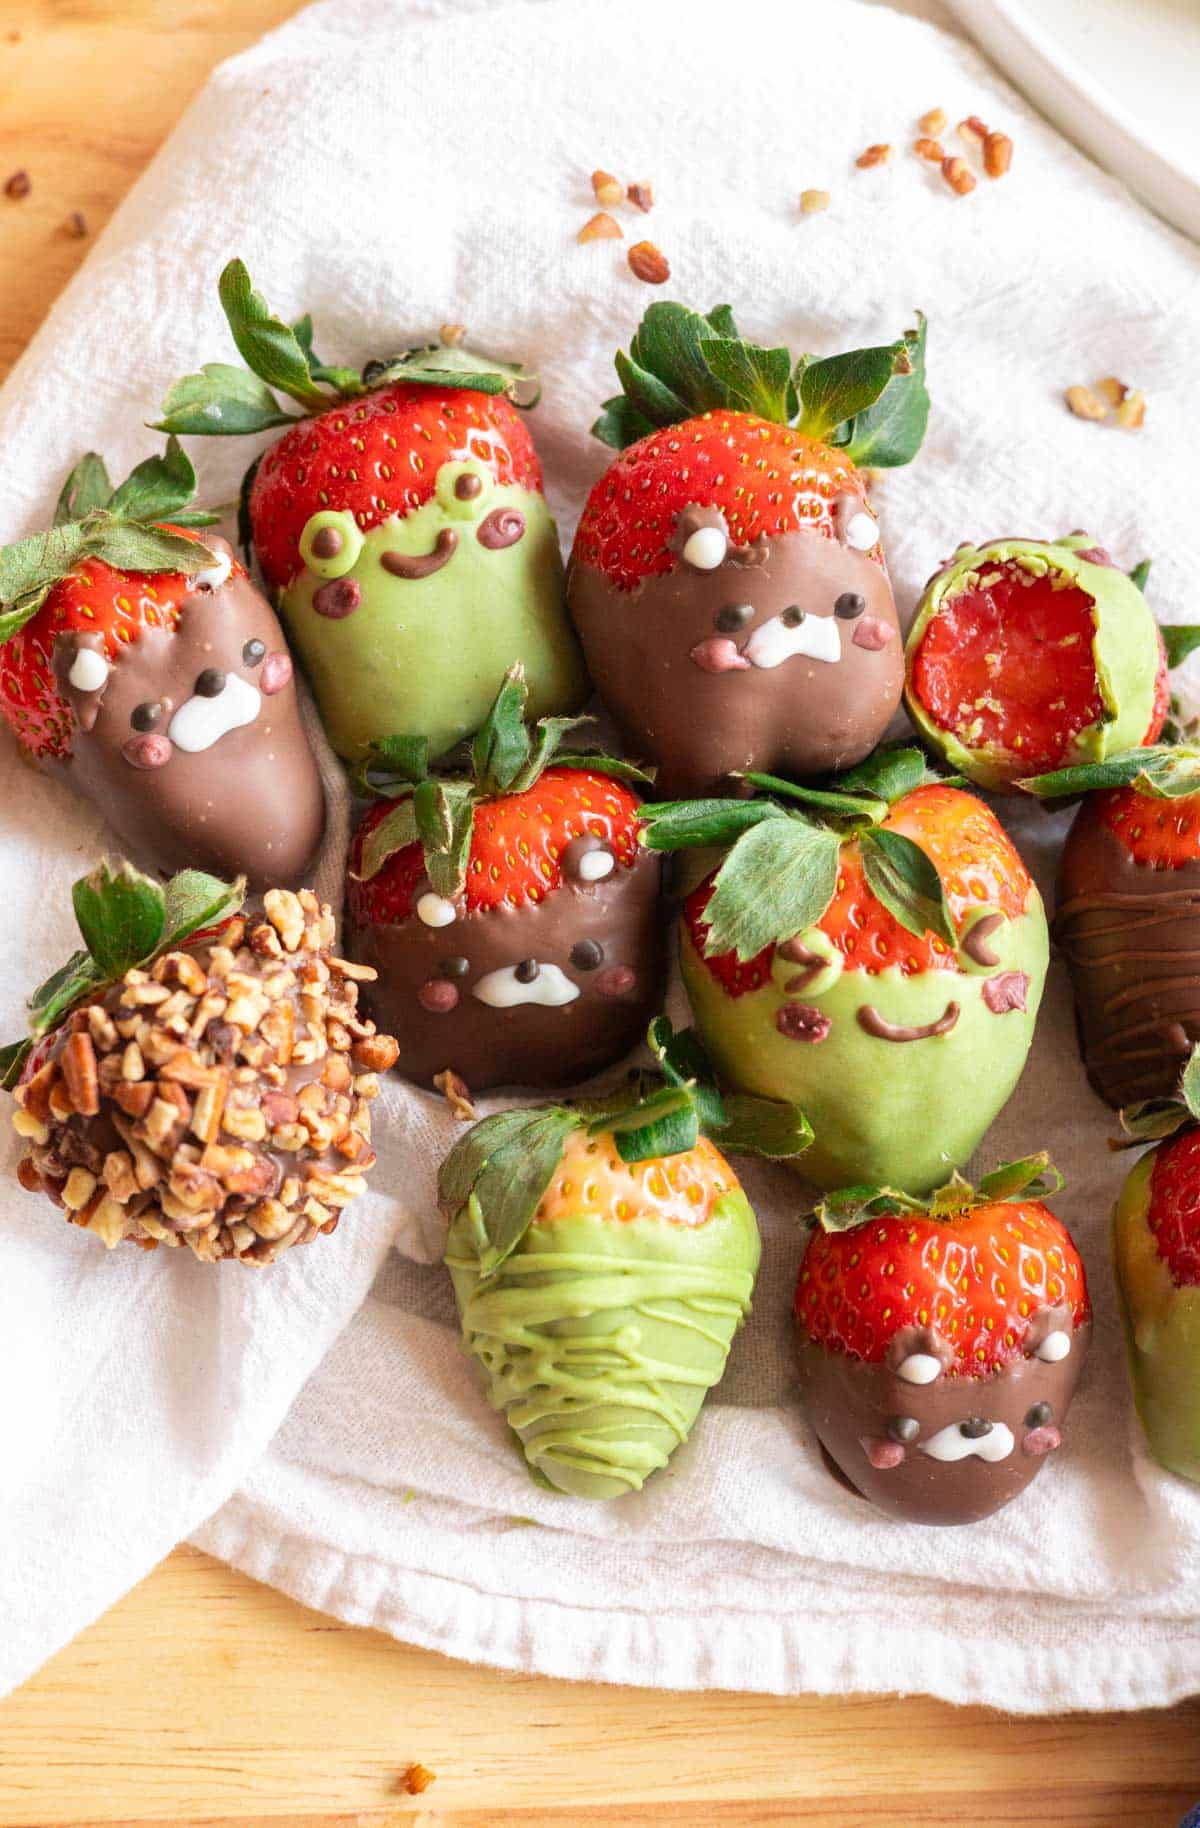 Cute chocolate covered strawberries; matcha frog strawberries and chocolate bear strawberries